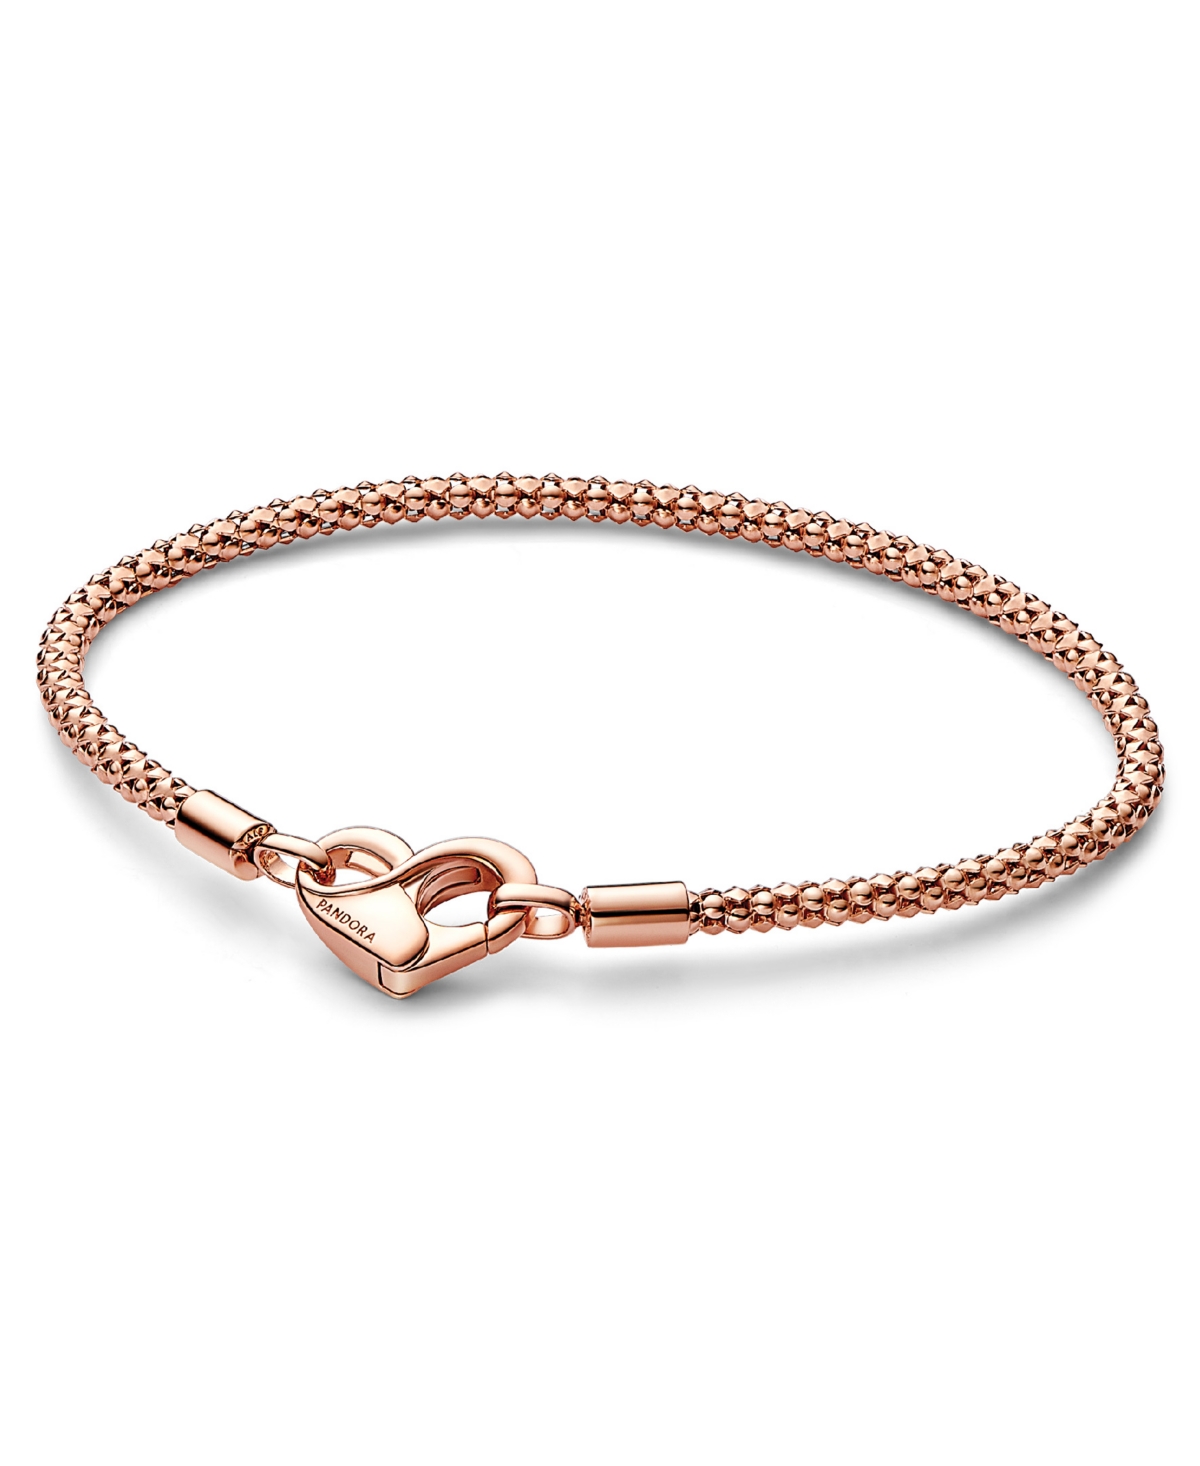 Pandora Moments 14k Rose Gold-plated Studded Chain Bracelet